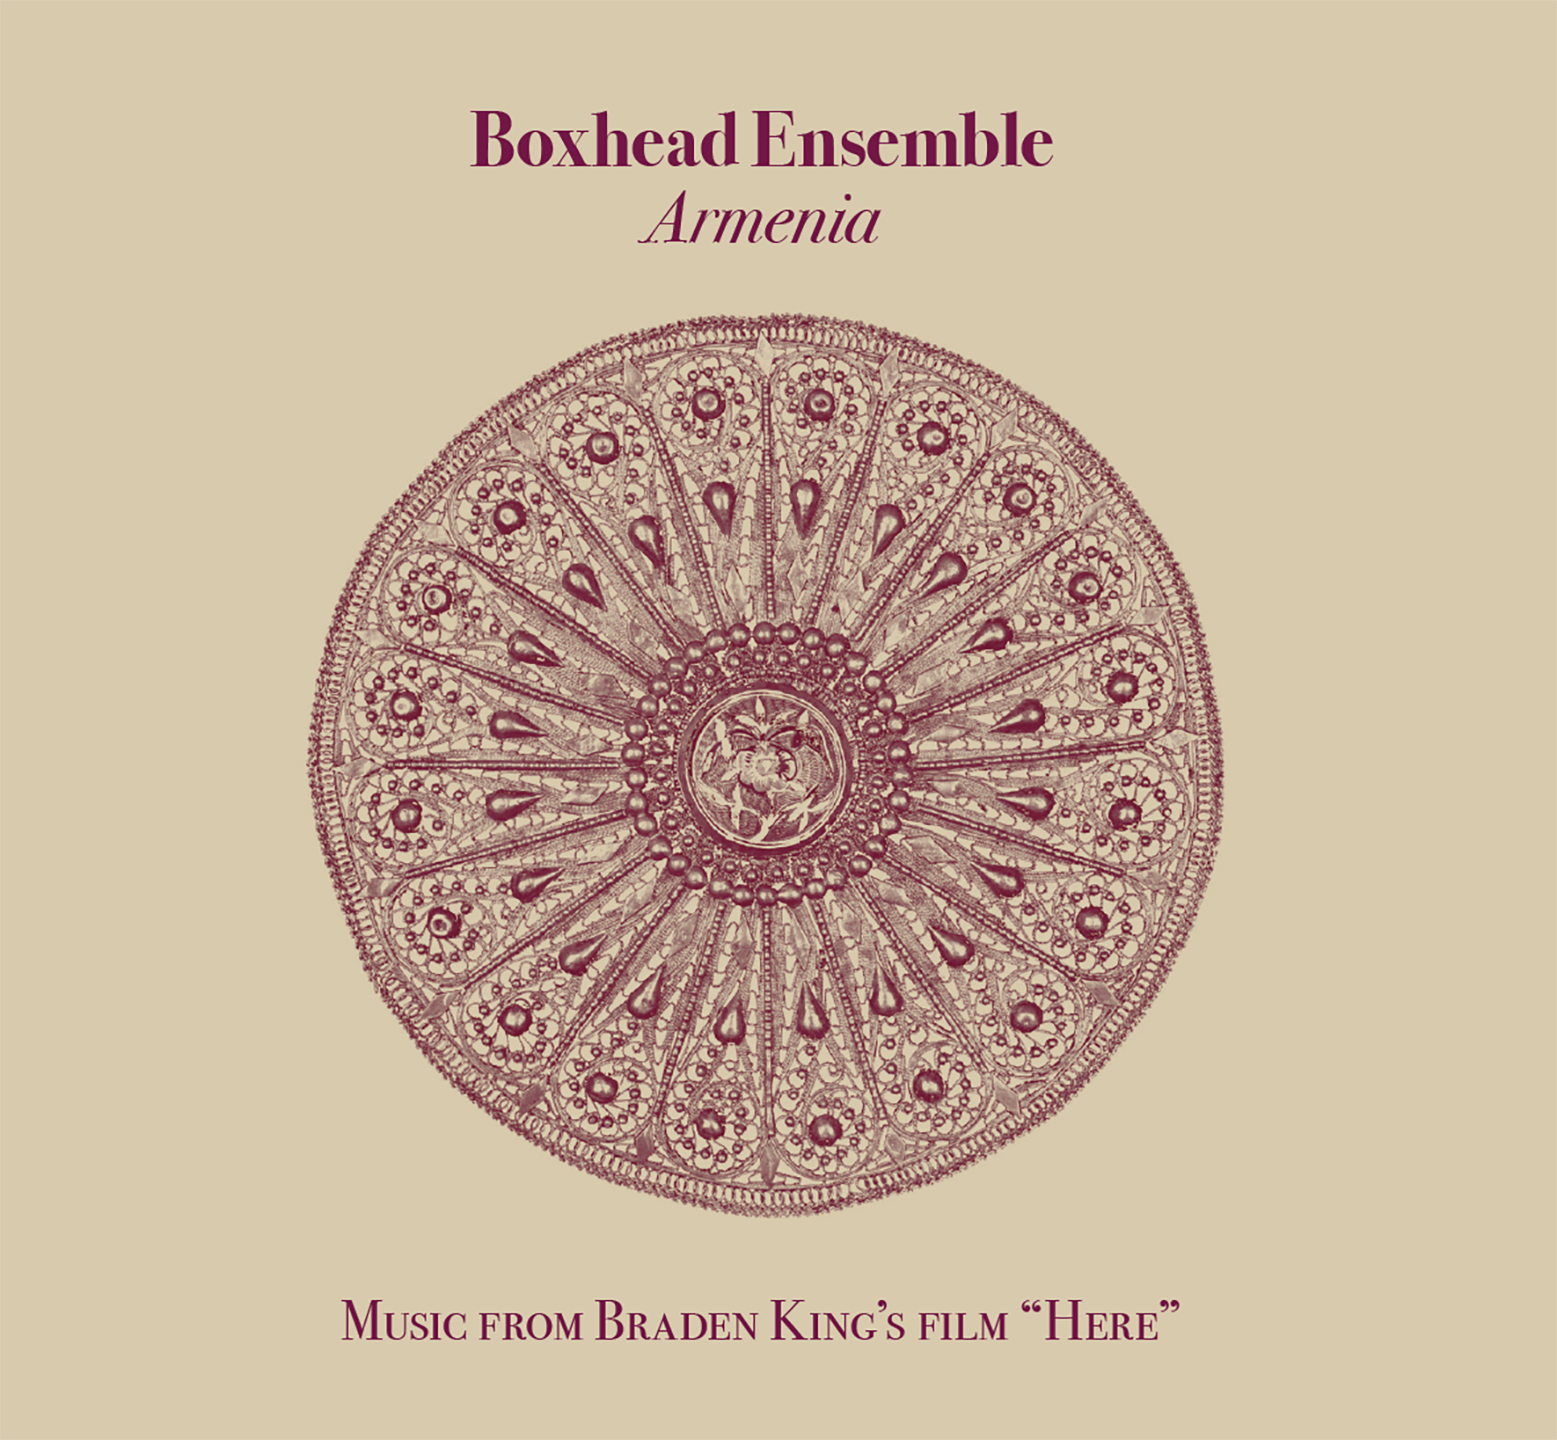 BOXHEAD ENSEMBLE - Armenia (music from Braden King's film "Here")